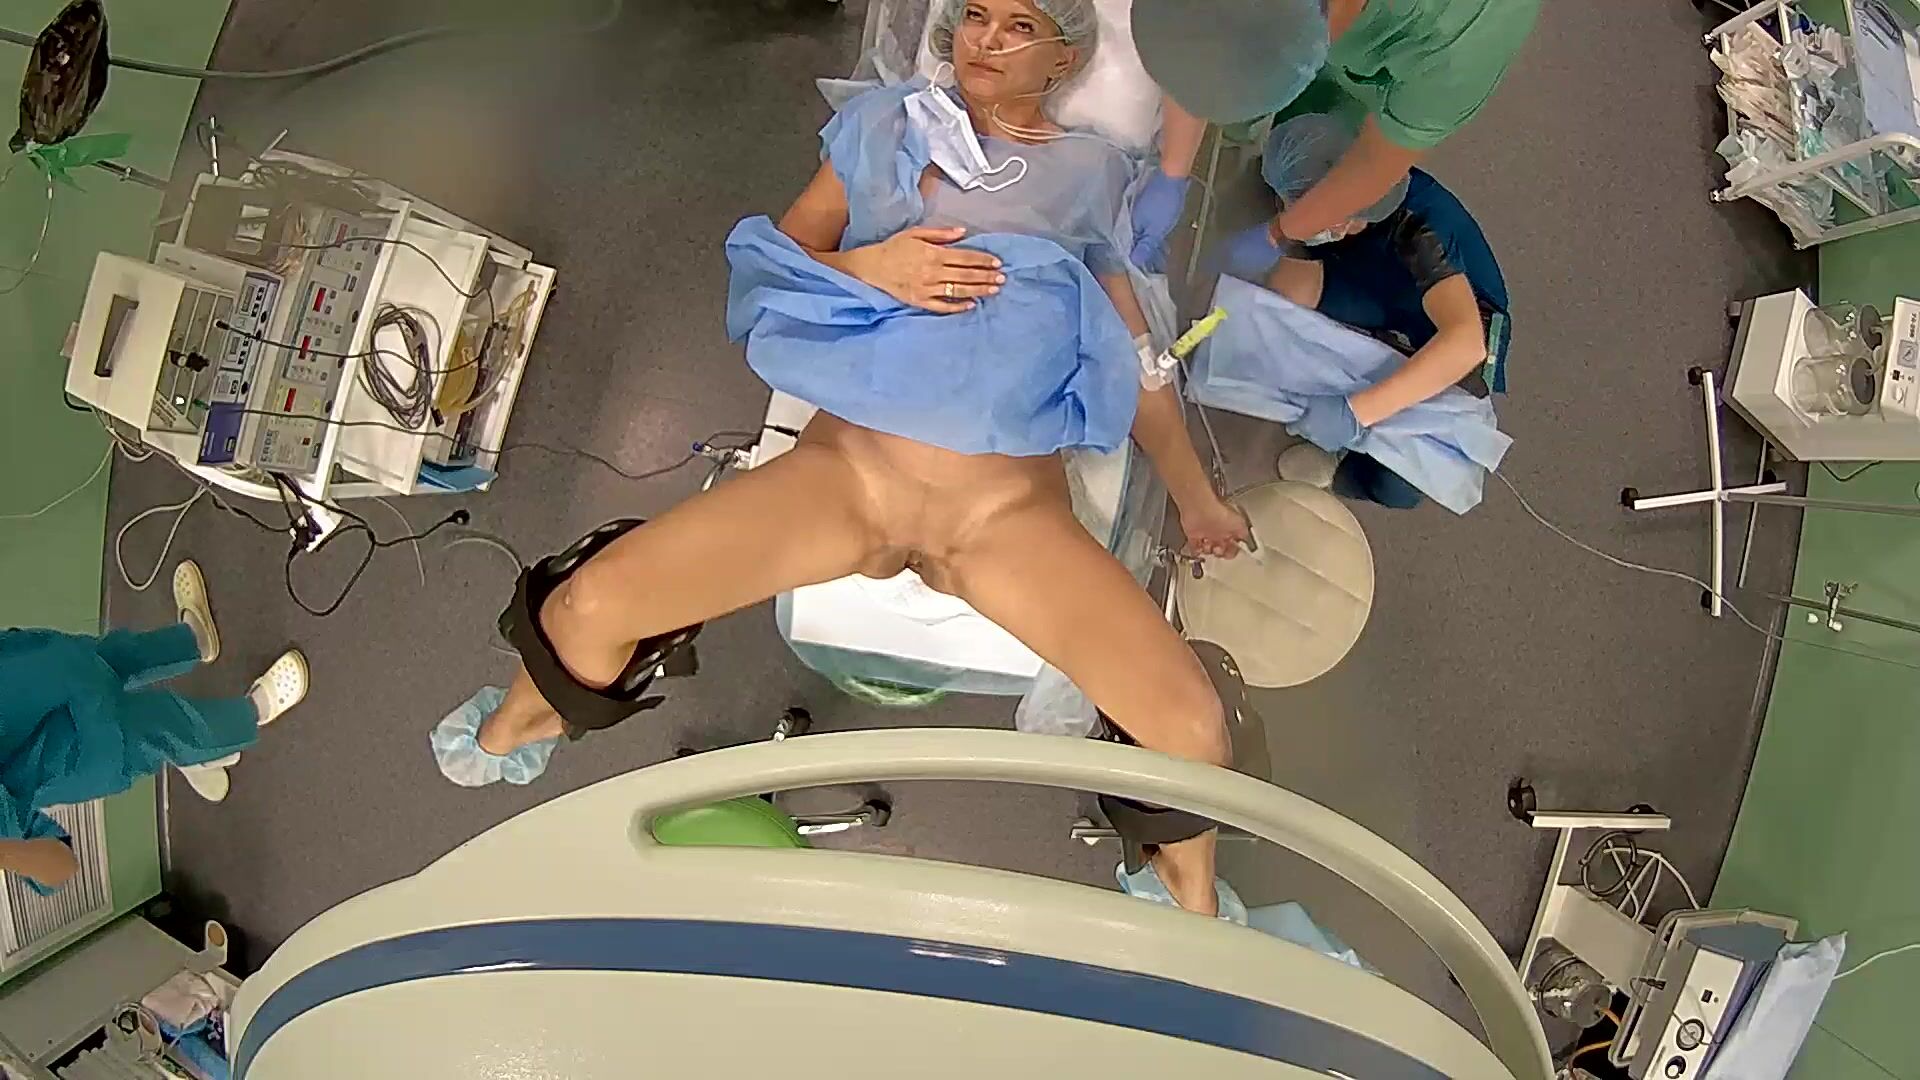 Gynecology operation 19